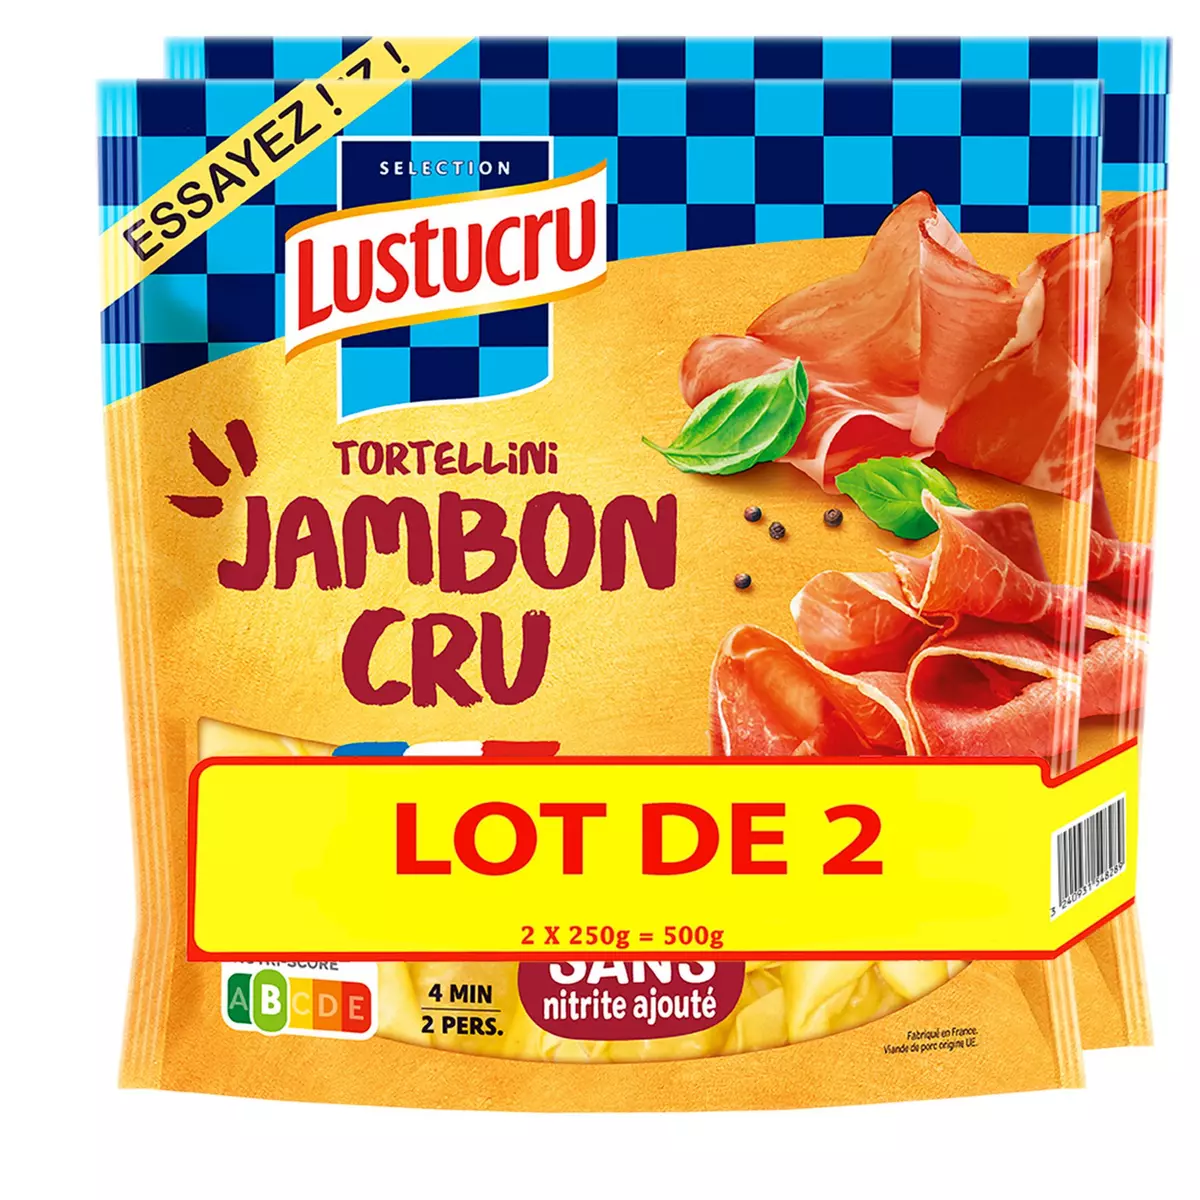 LUSTUCRU Tortellini au jambon cru 2x2 portions 2x250g